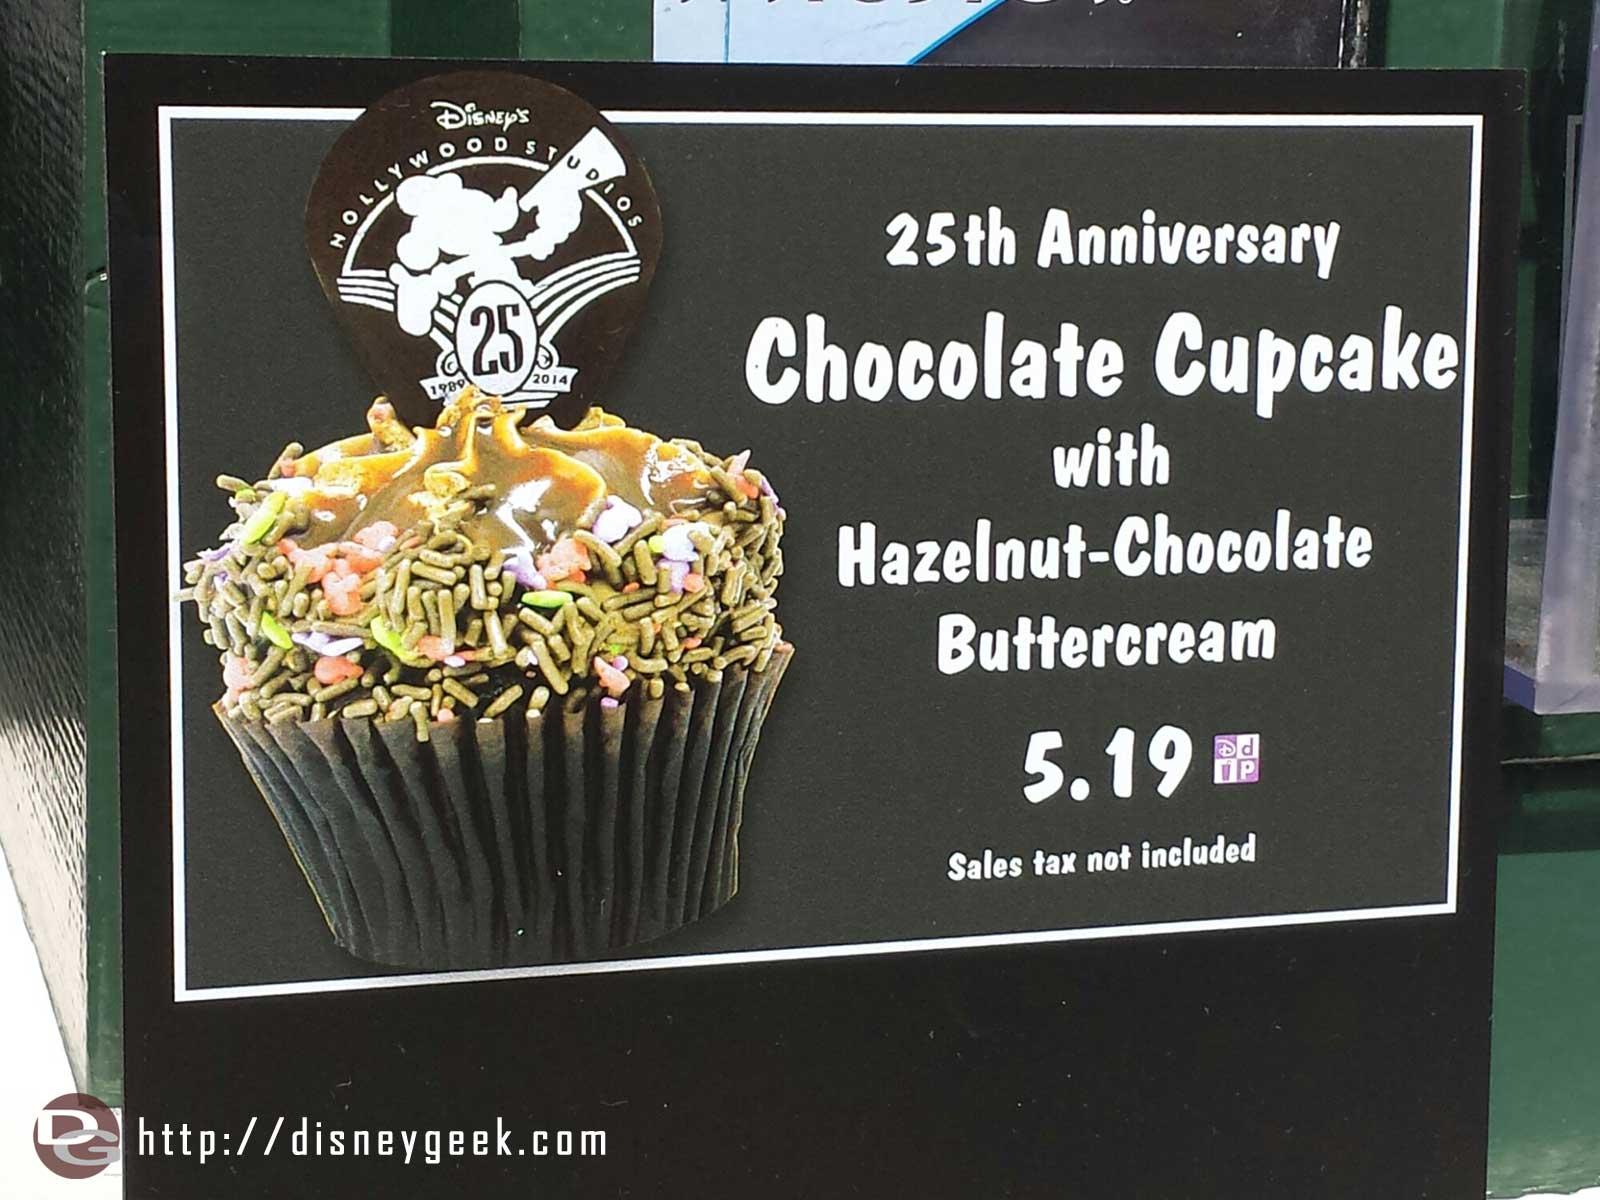 25th Anniversary Cupcake at Disney's Hollywood Studios